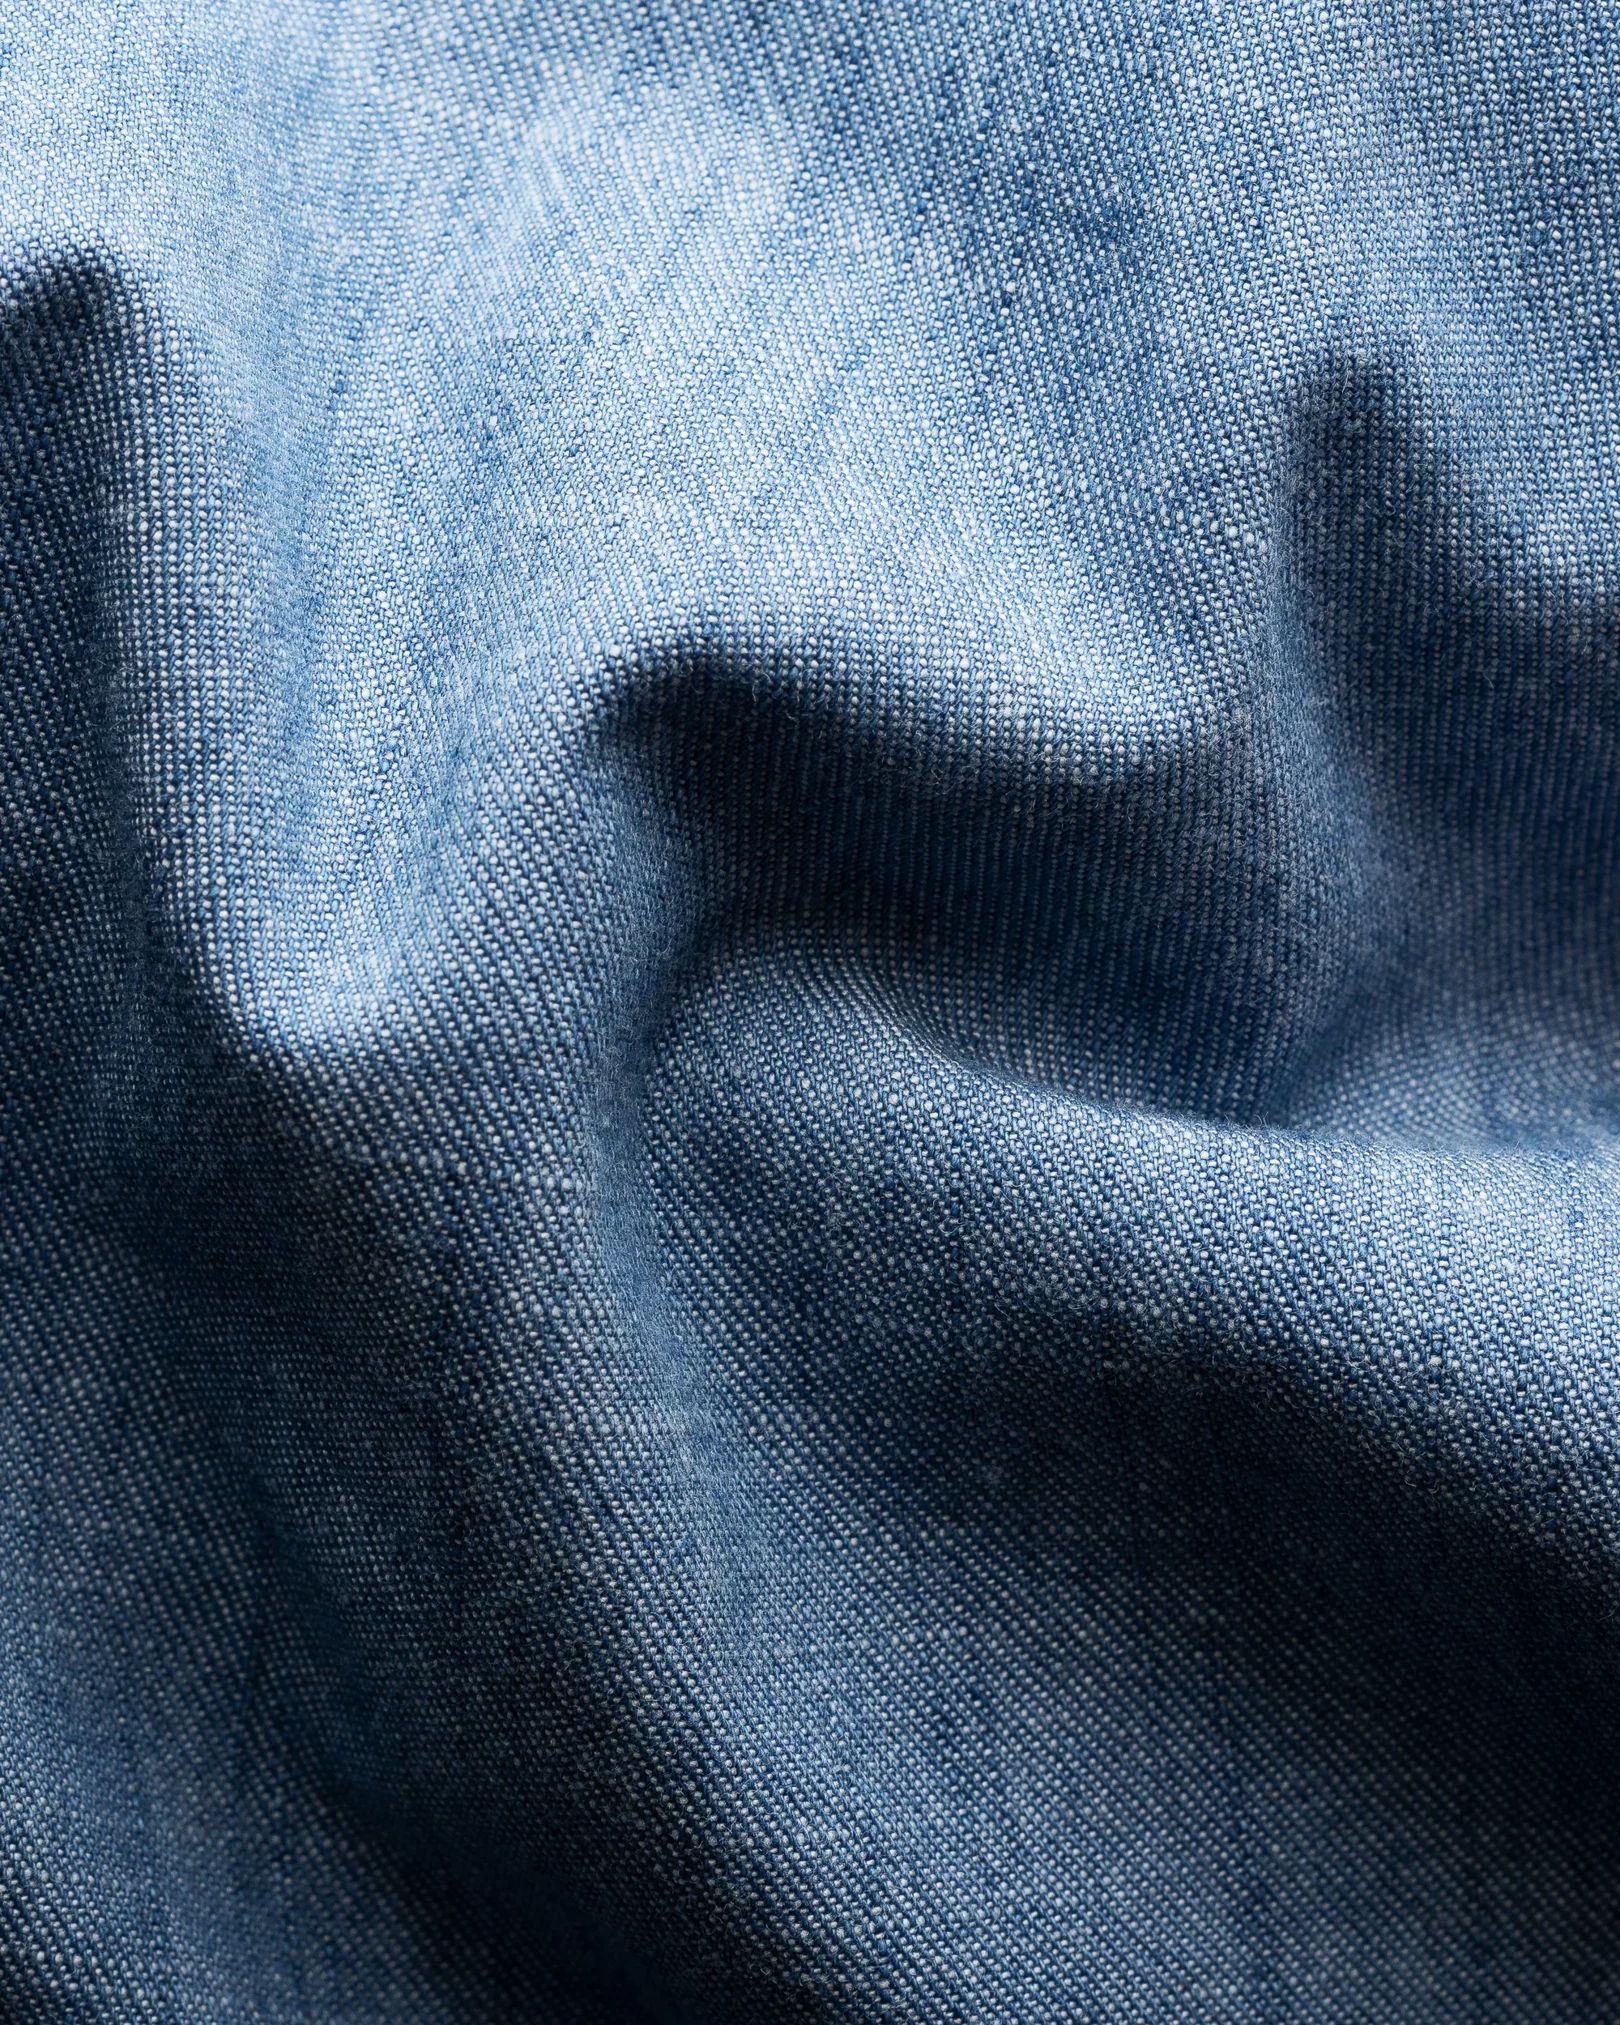 Eton - blue lightweight denim shirt